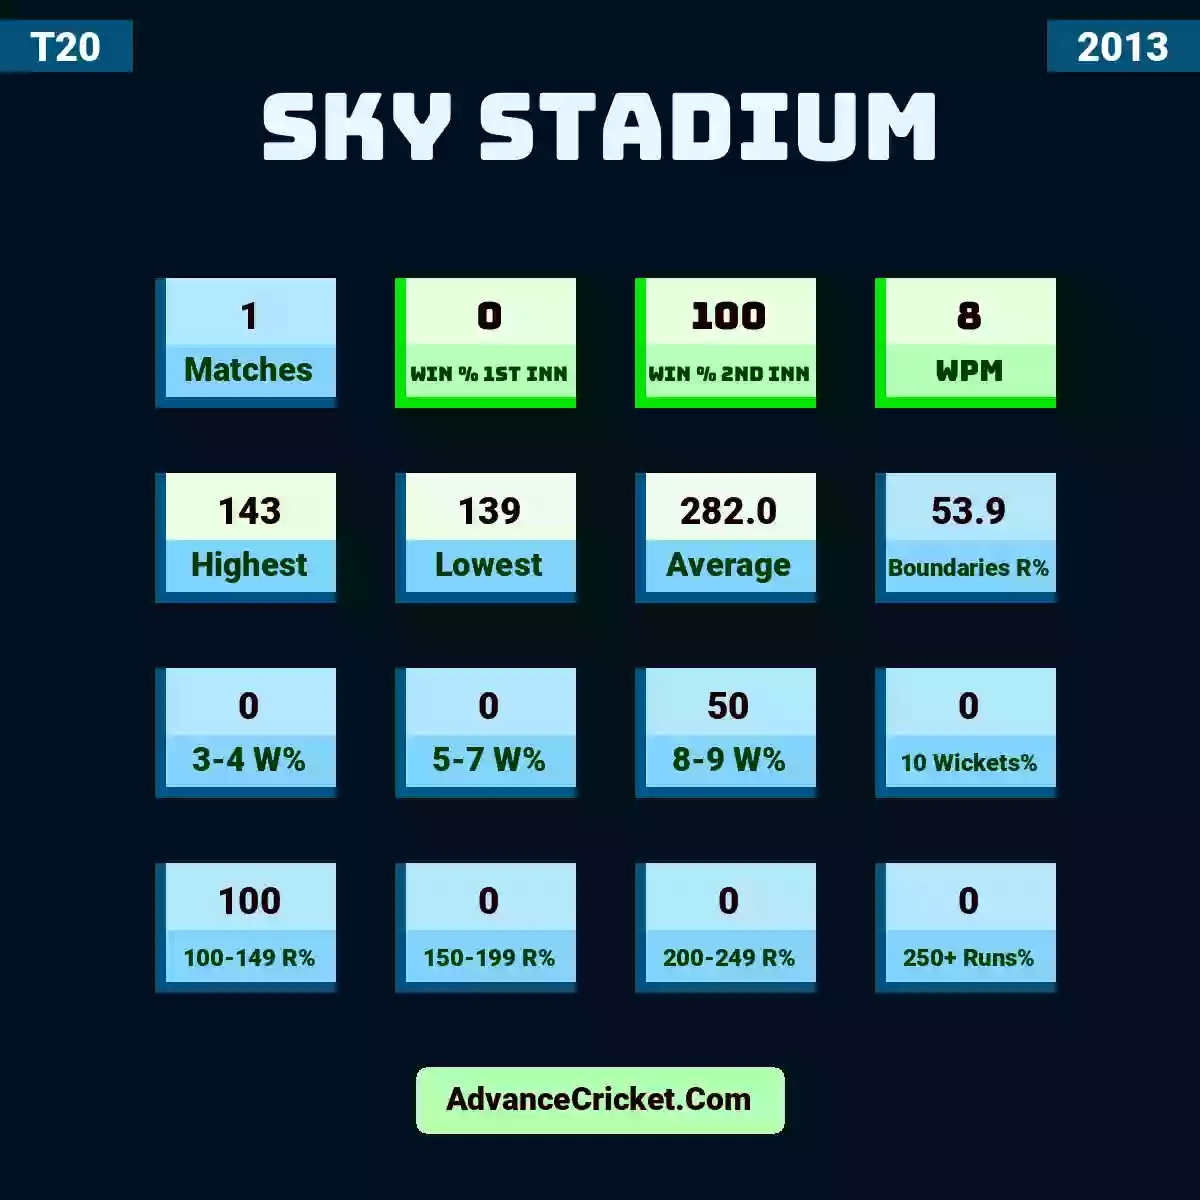 Image showing Sky Stadium with Matches: 1, Win % 1st Inn: 0, Win % 2nd Inn: 100, WPM: 8, Highest: 143, Lowest: 139, Average: 282.0, Boundaries R%: 53.9, 3-4 W%: 0, 5-7 W%: 0, 8-9 W%: 50, 10 Wickets%: 0, 100-149 R%: 100, 150-199 R%: 0, 200-249 R%: 0, 250+ Runs%: 0.